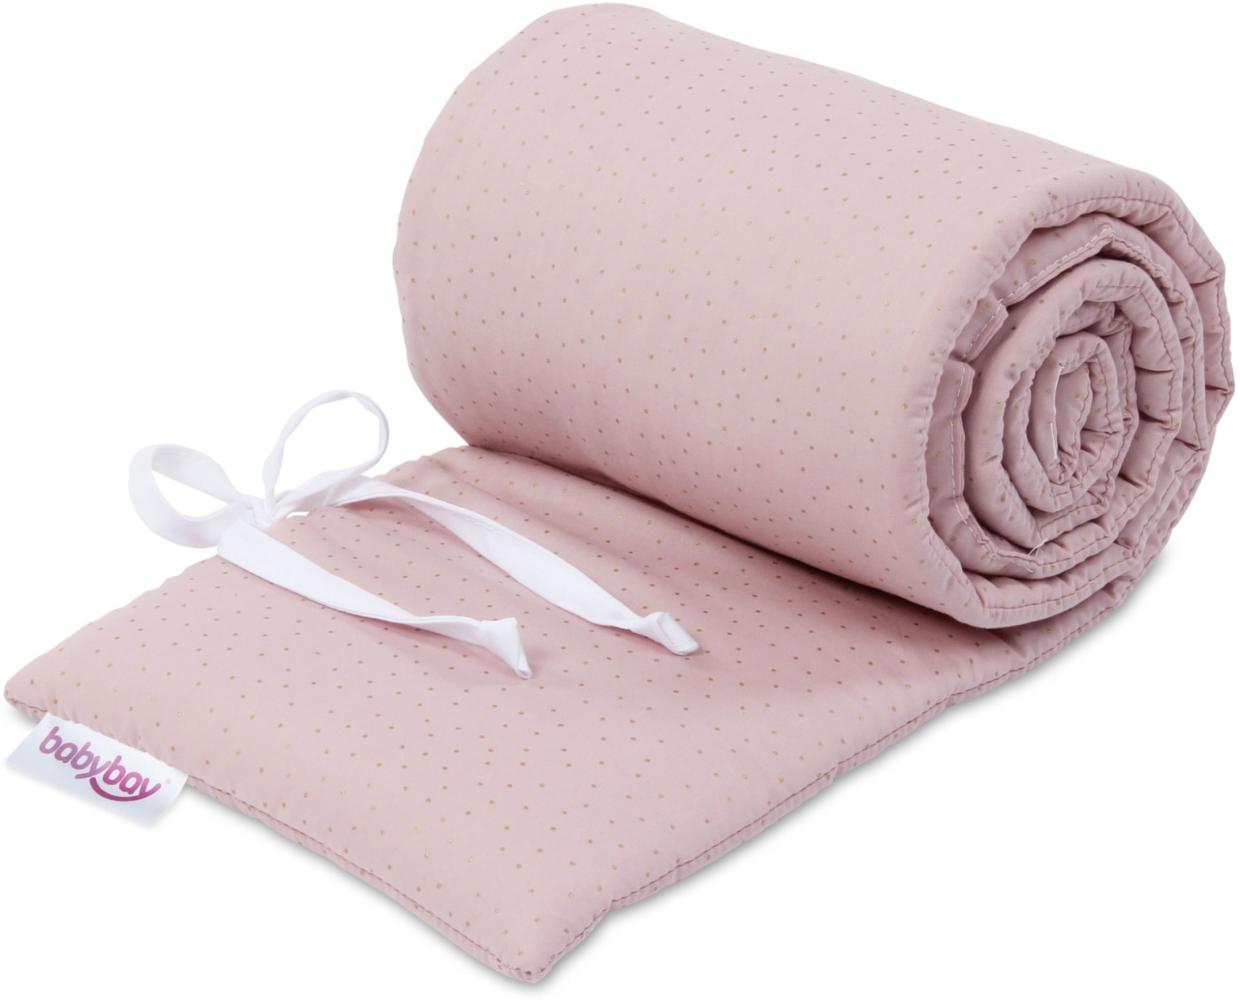 babybay Nestchen Organic Cotton Royal passend für Modell Boxspring XXL, rosé Glitzerpunkte gold Bild 1